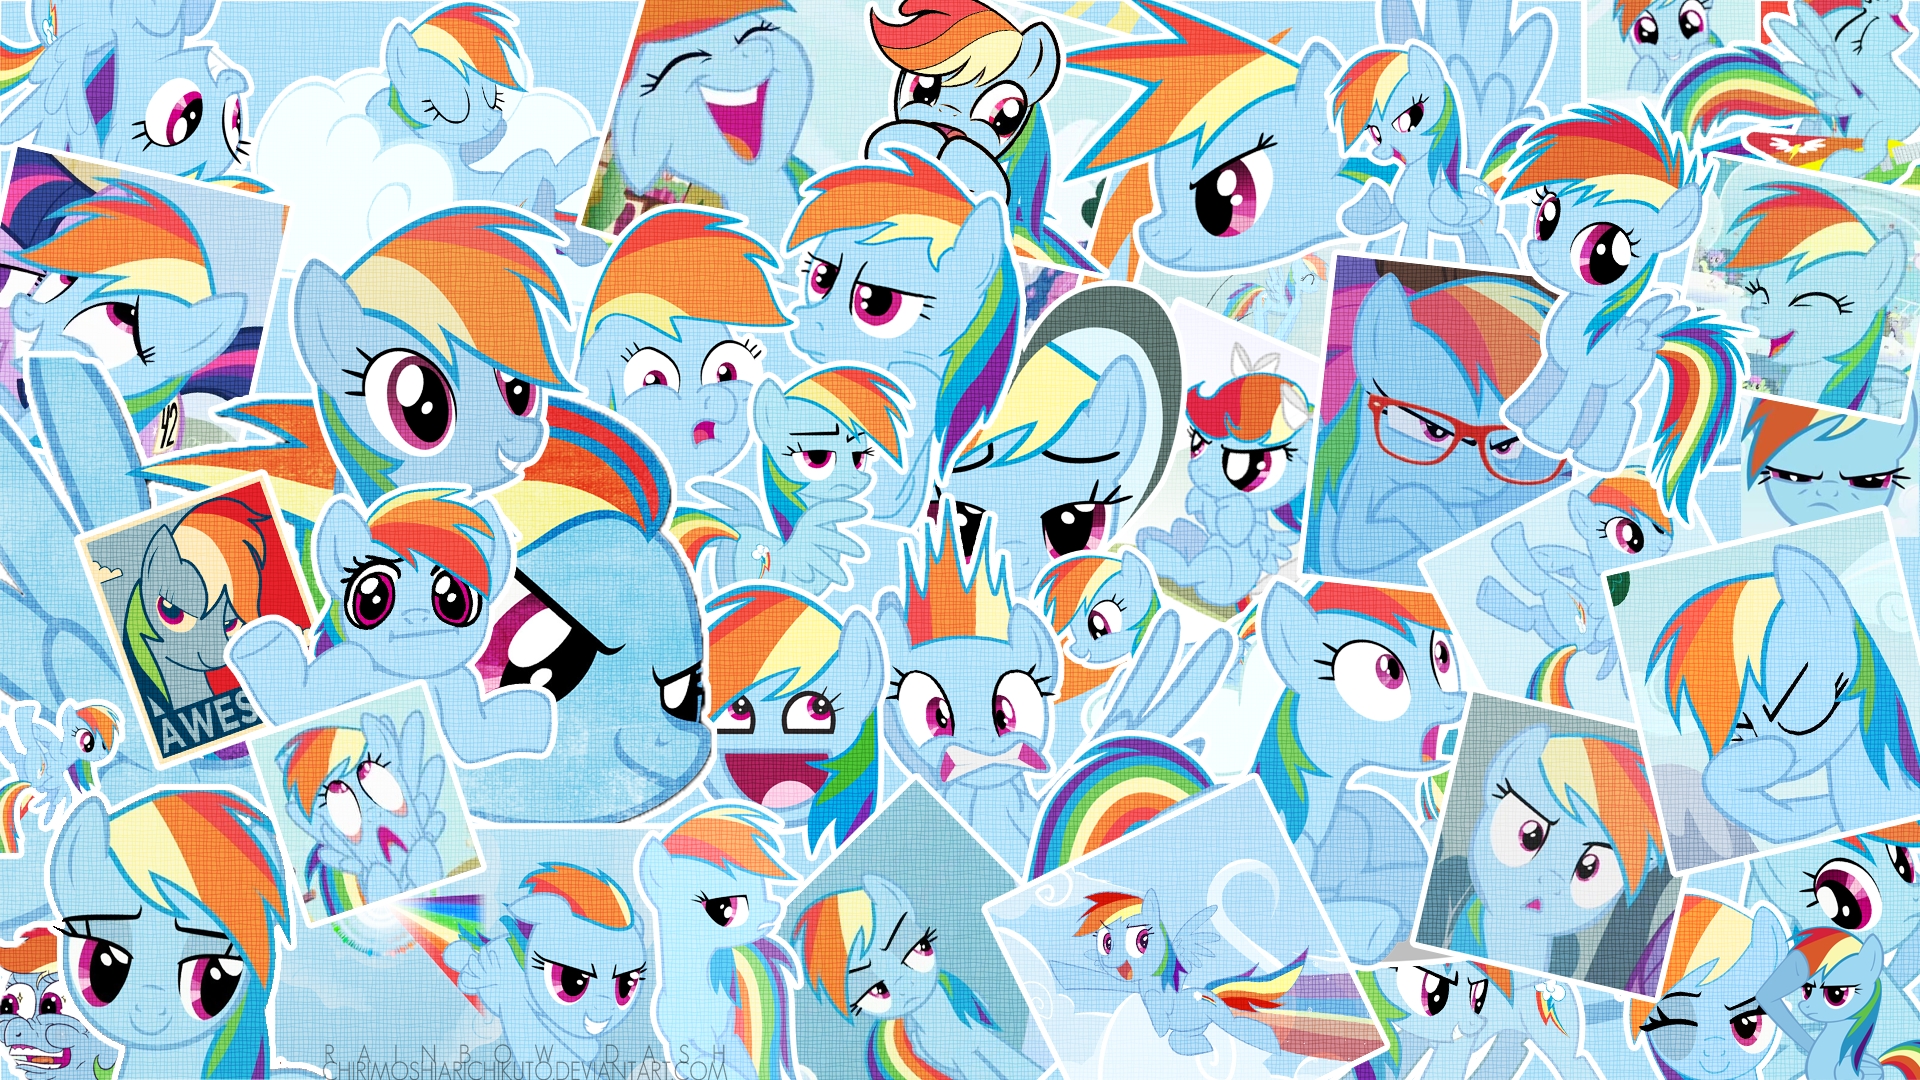 my little pony collage rainbow dash 1920x1080 wallpaper High Quality Wallpaper, High Definition Wallpaper